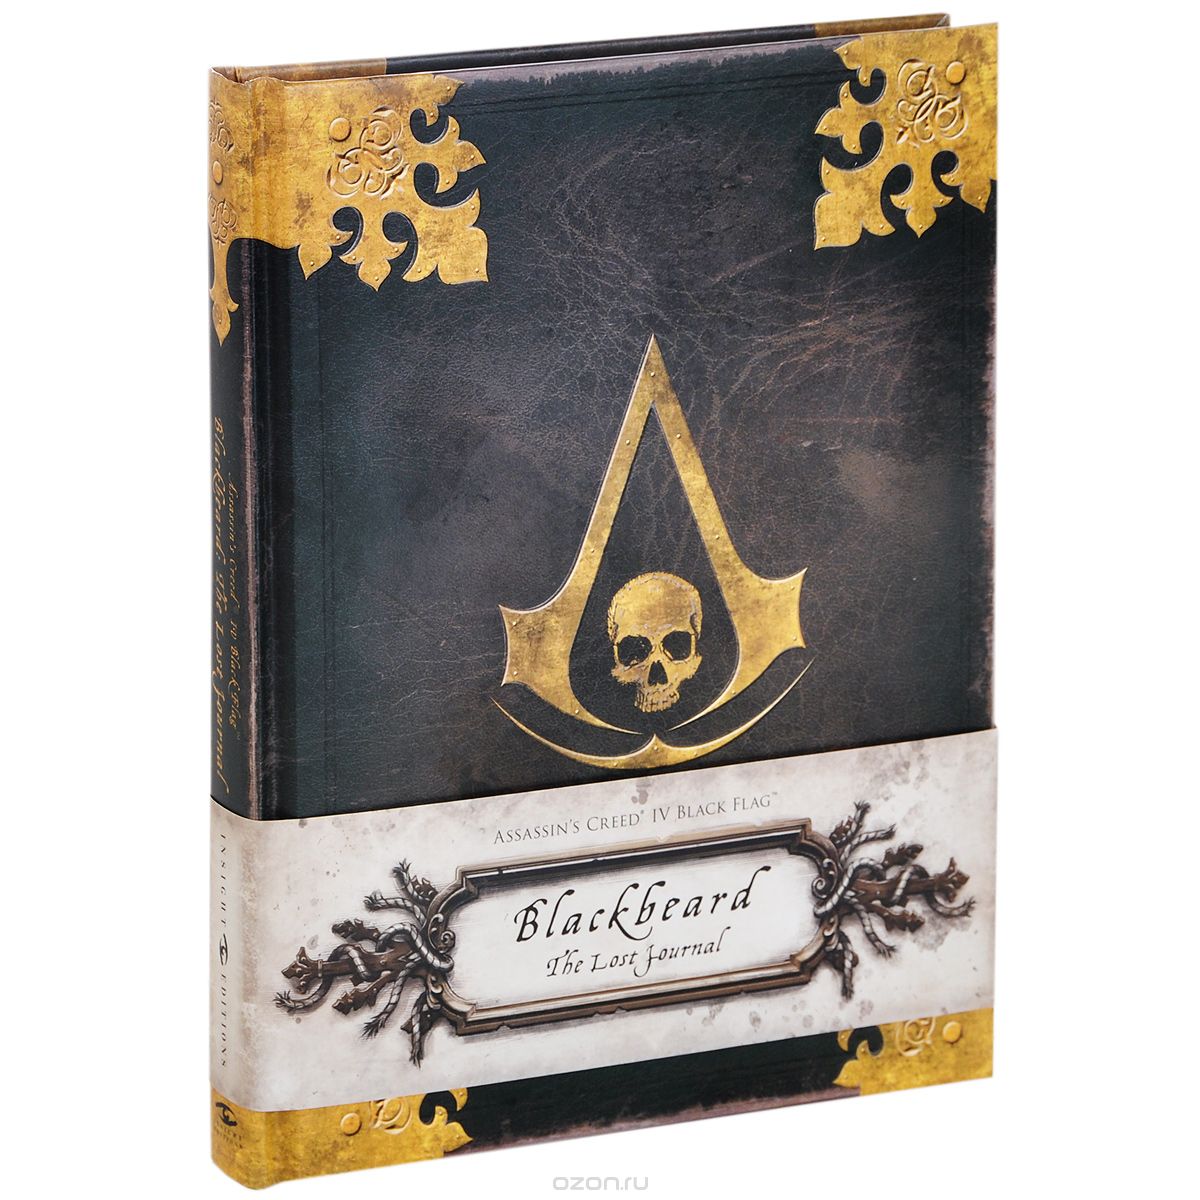 Скачать книгу "Assassin's Creed IV Black Flag: Blackbeard: The Lost Journal"